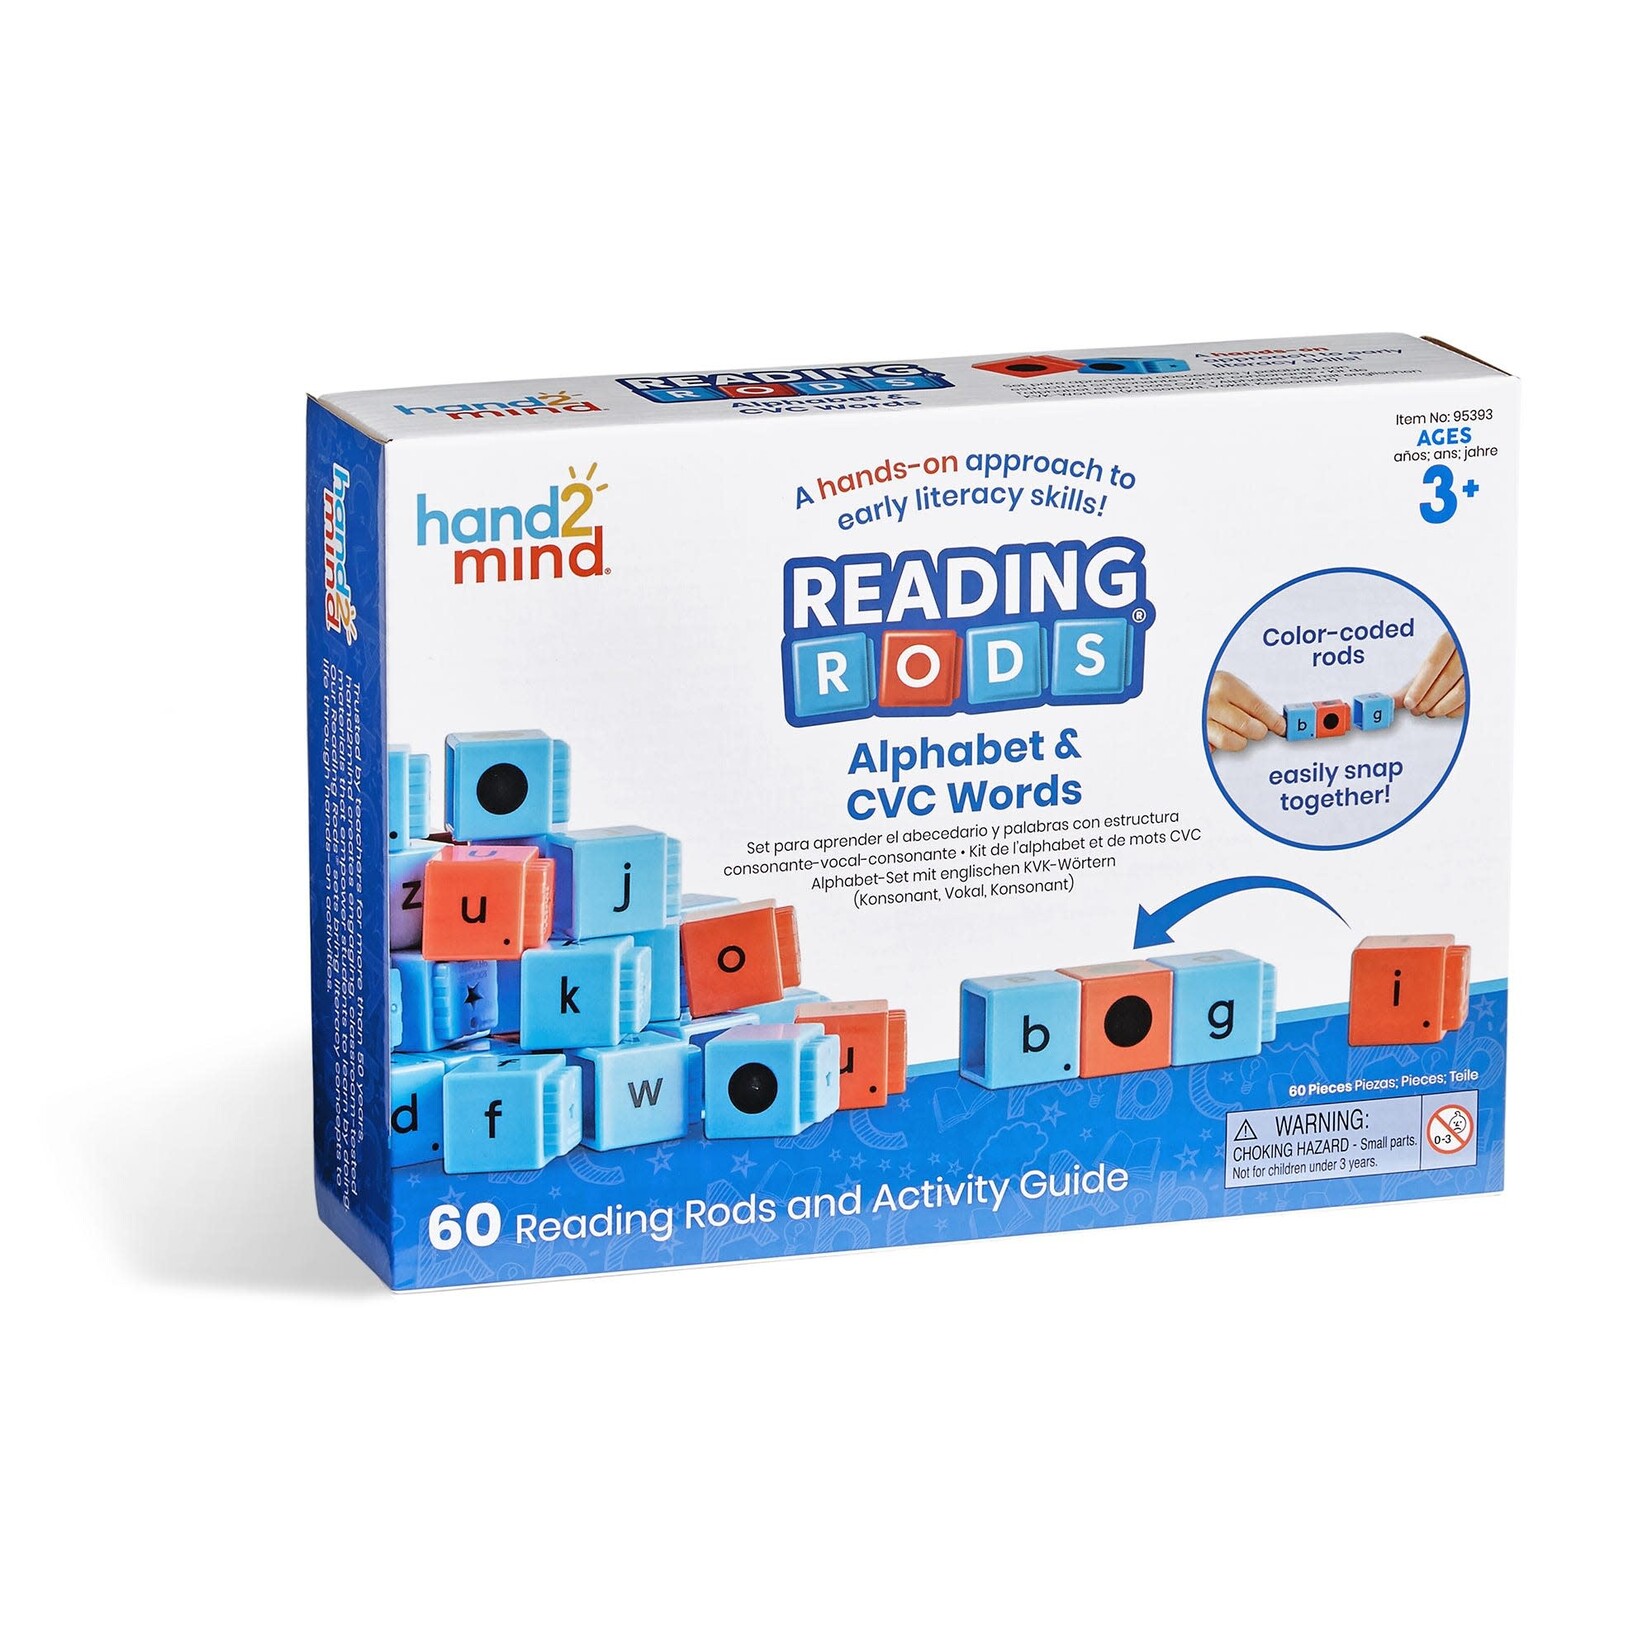 Reading Rods® Alphabet & CVC Words